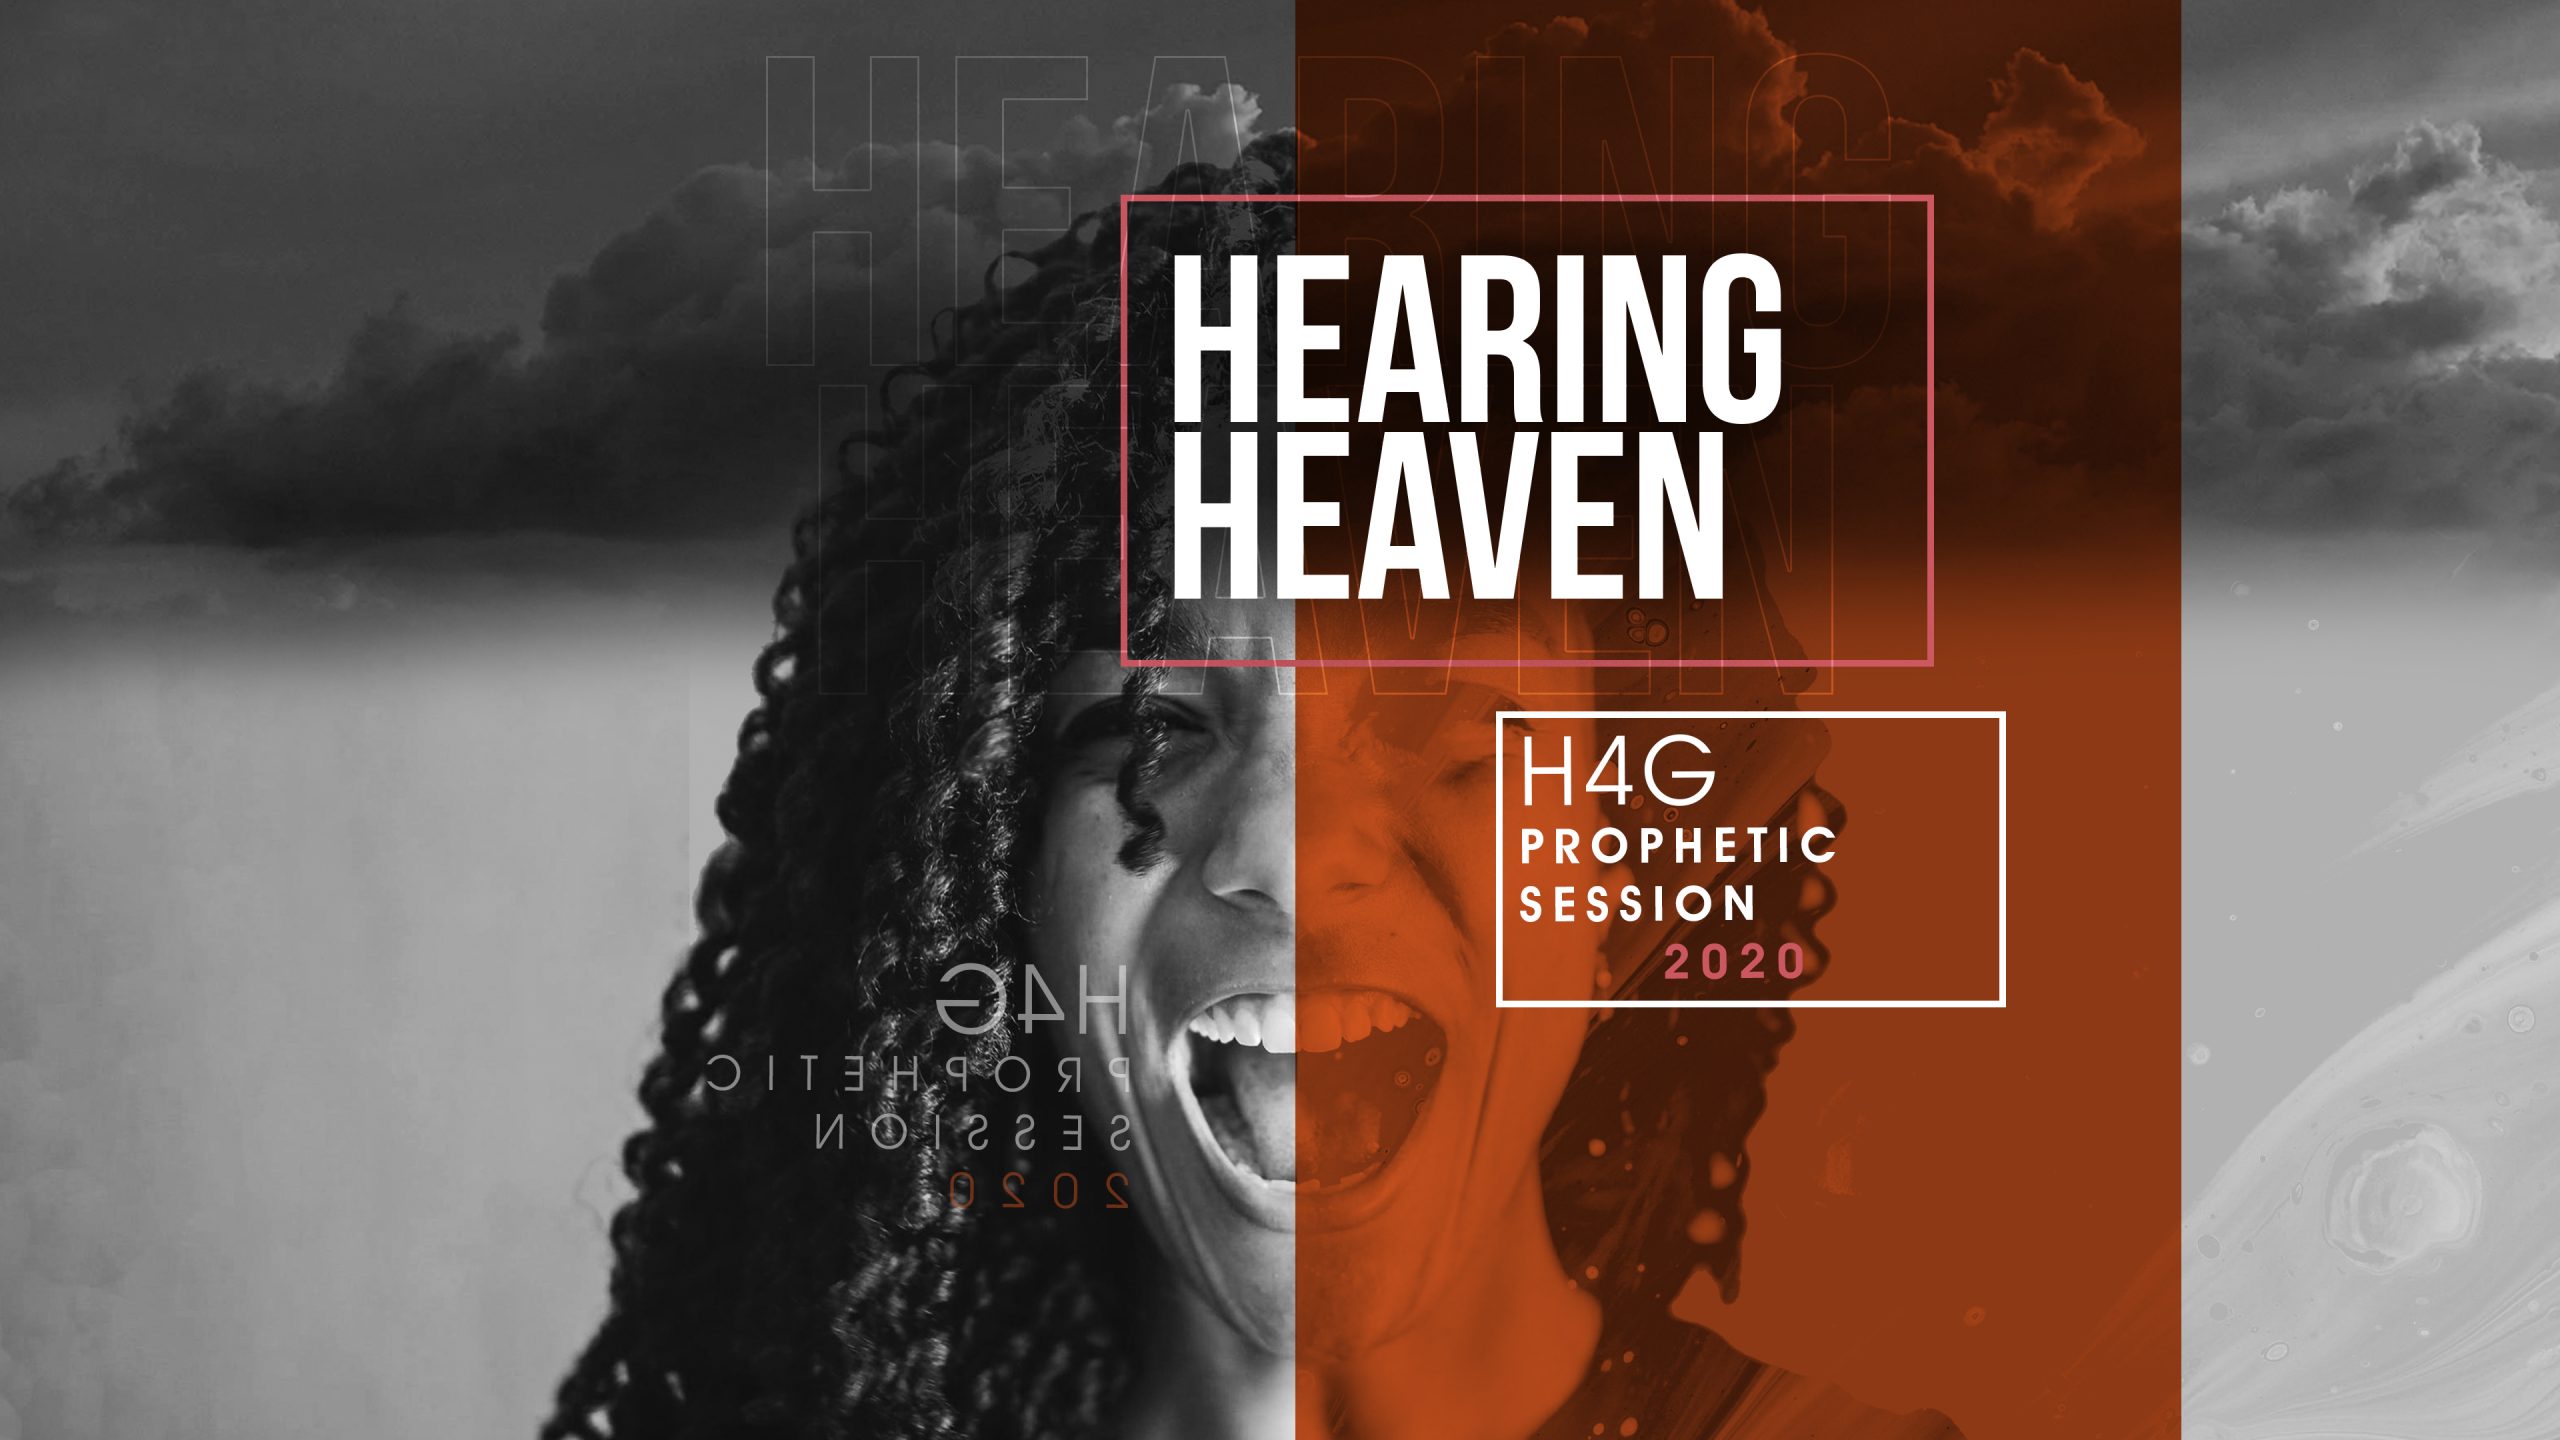 H4G: Hearing Heaven